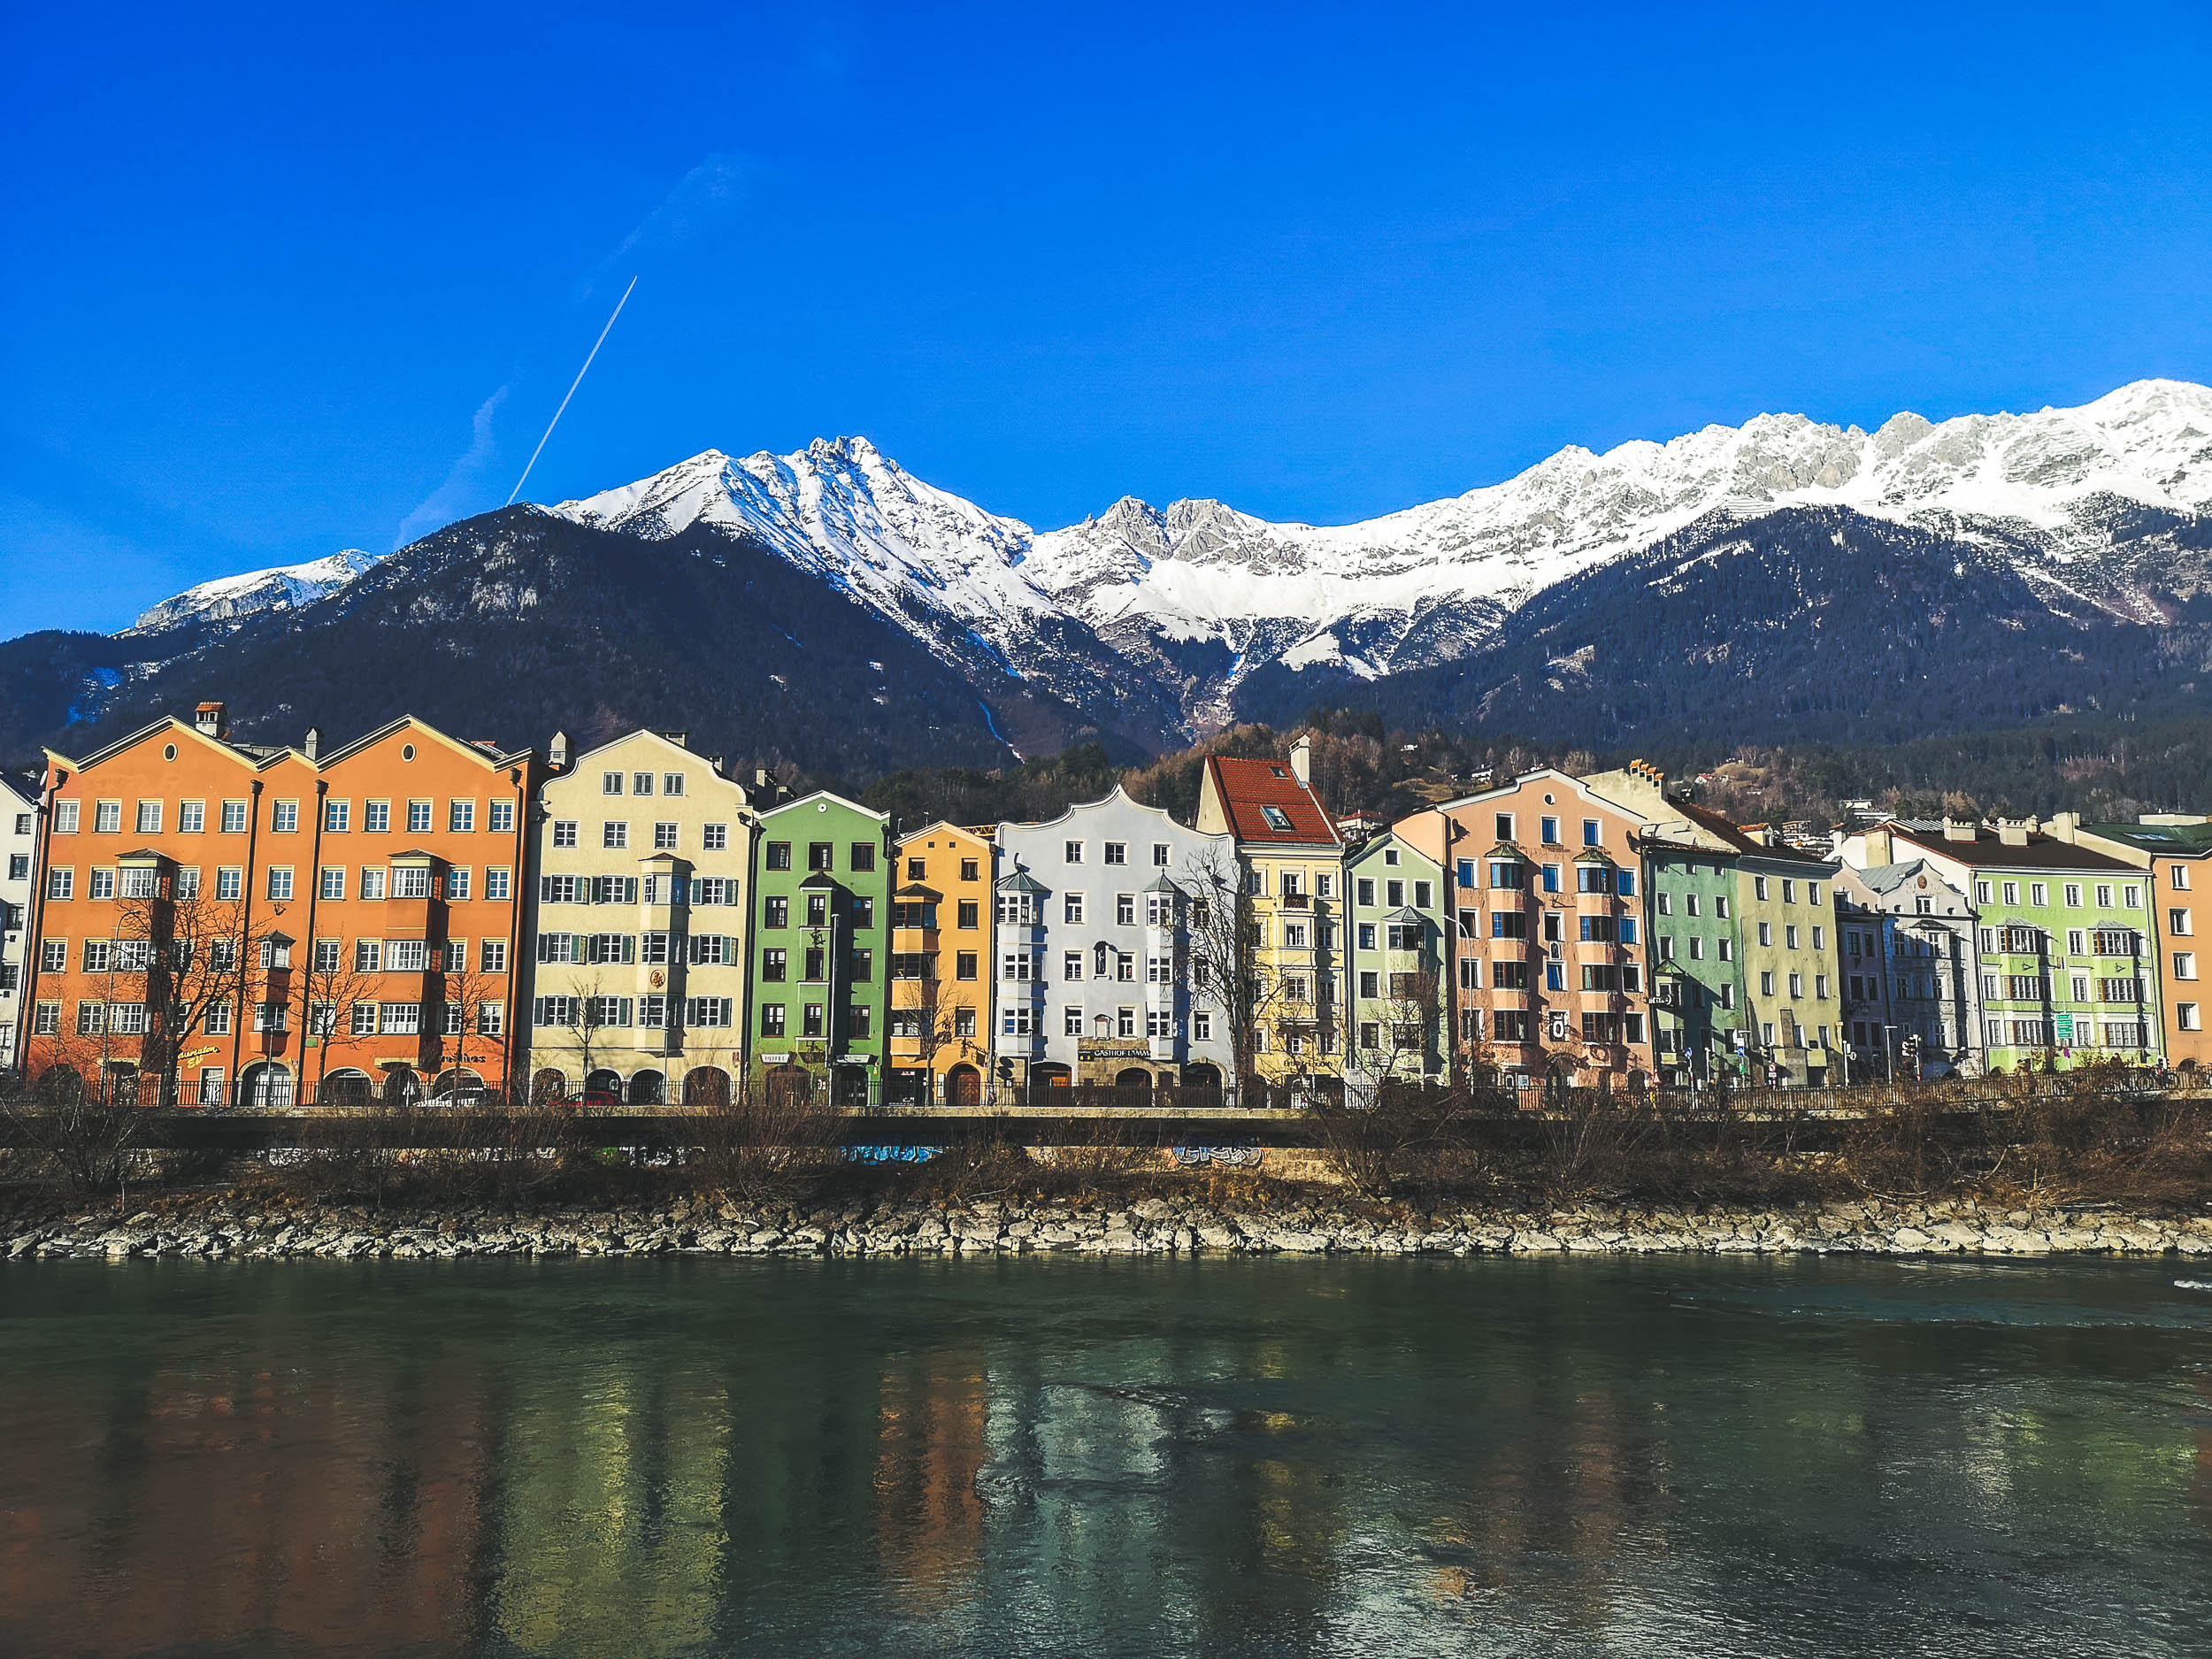 Mariahilf street by Inns river, Innsbruck